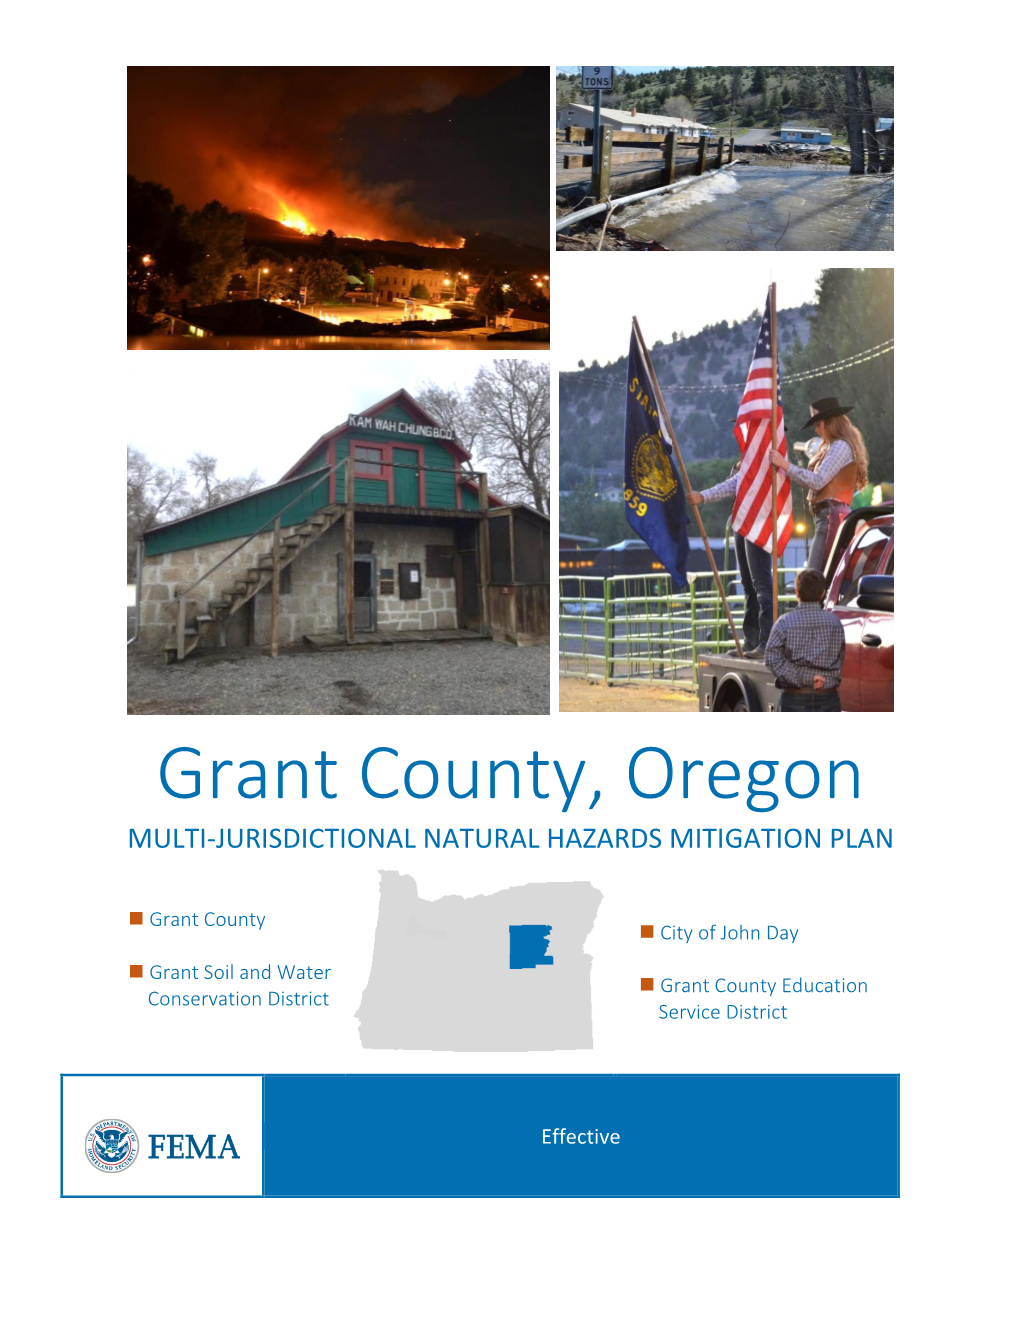 Grant County, Oregon MULTI-JURISDICTIONAL NATURAL HAZARDS MITIGATION PLAN